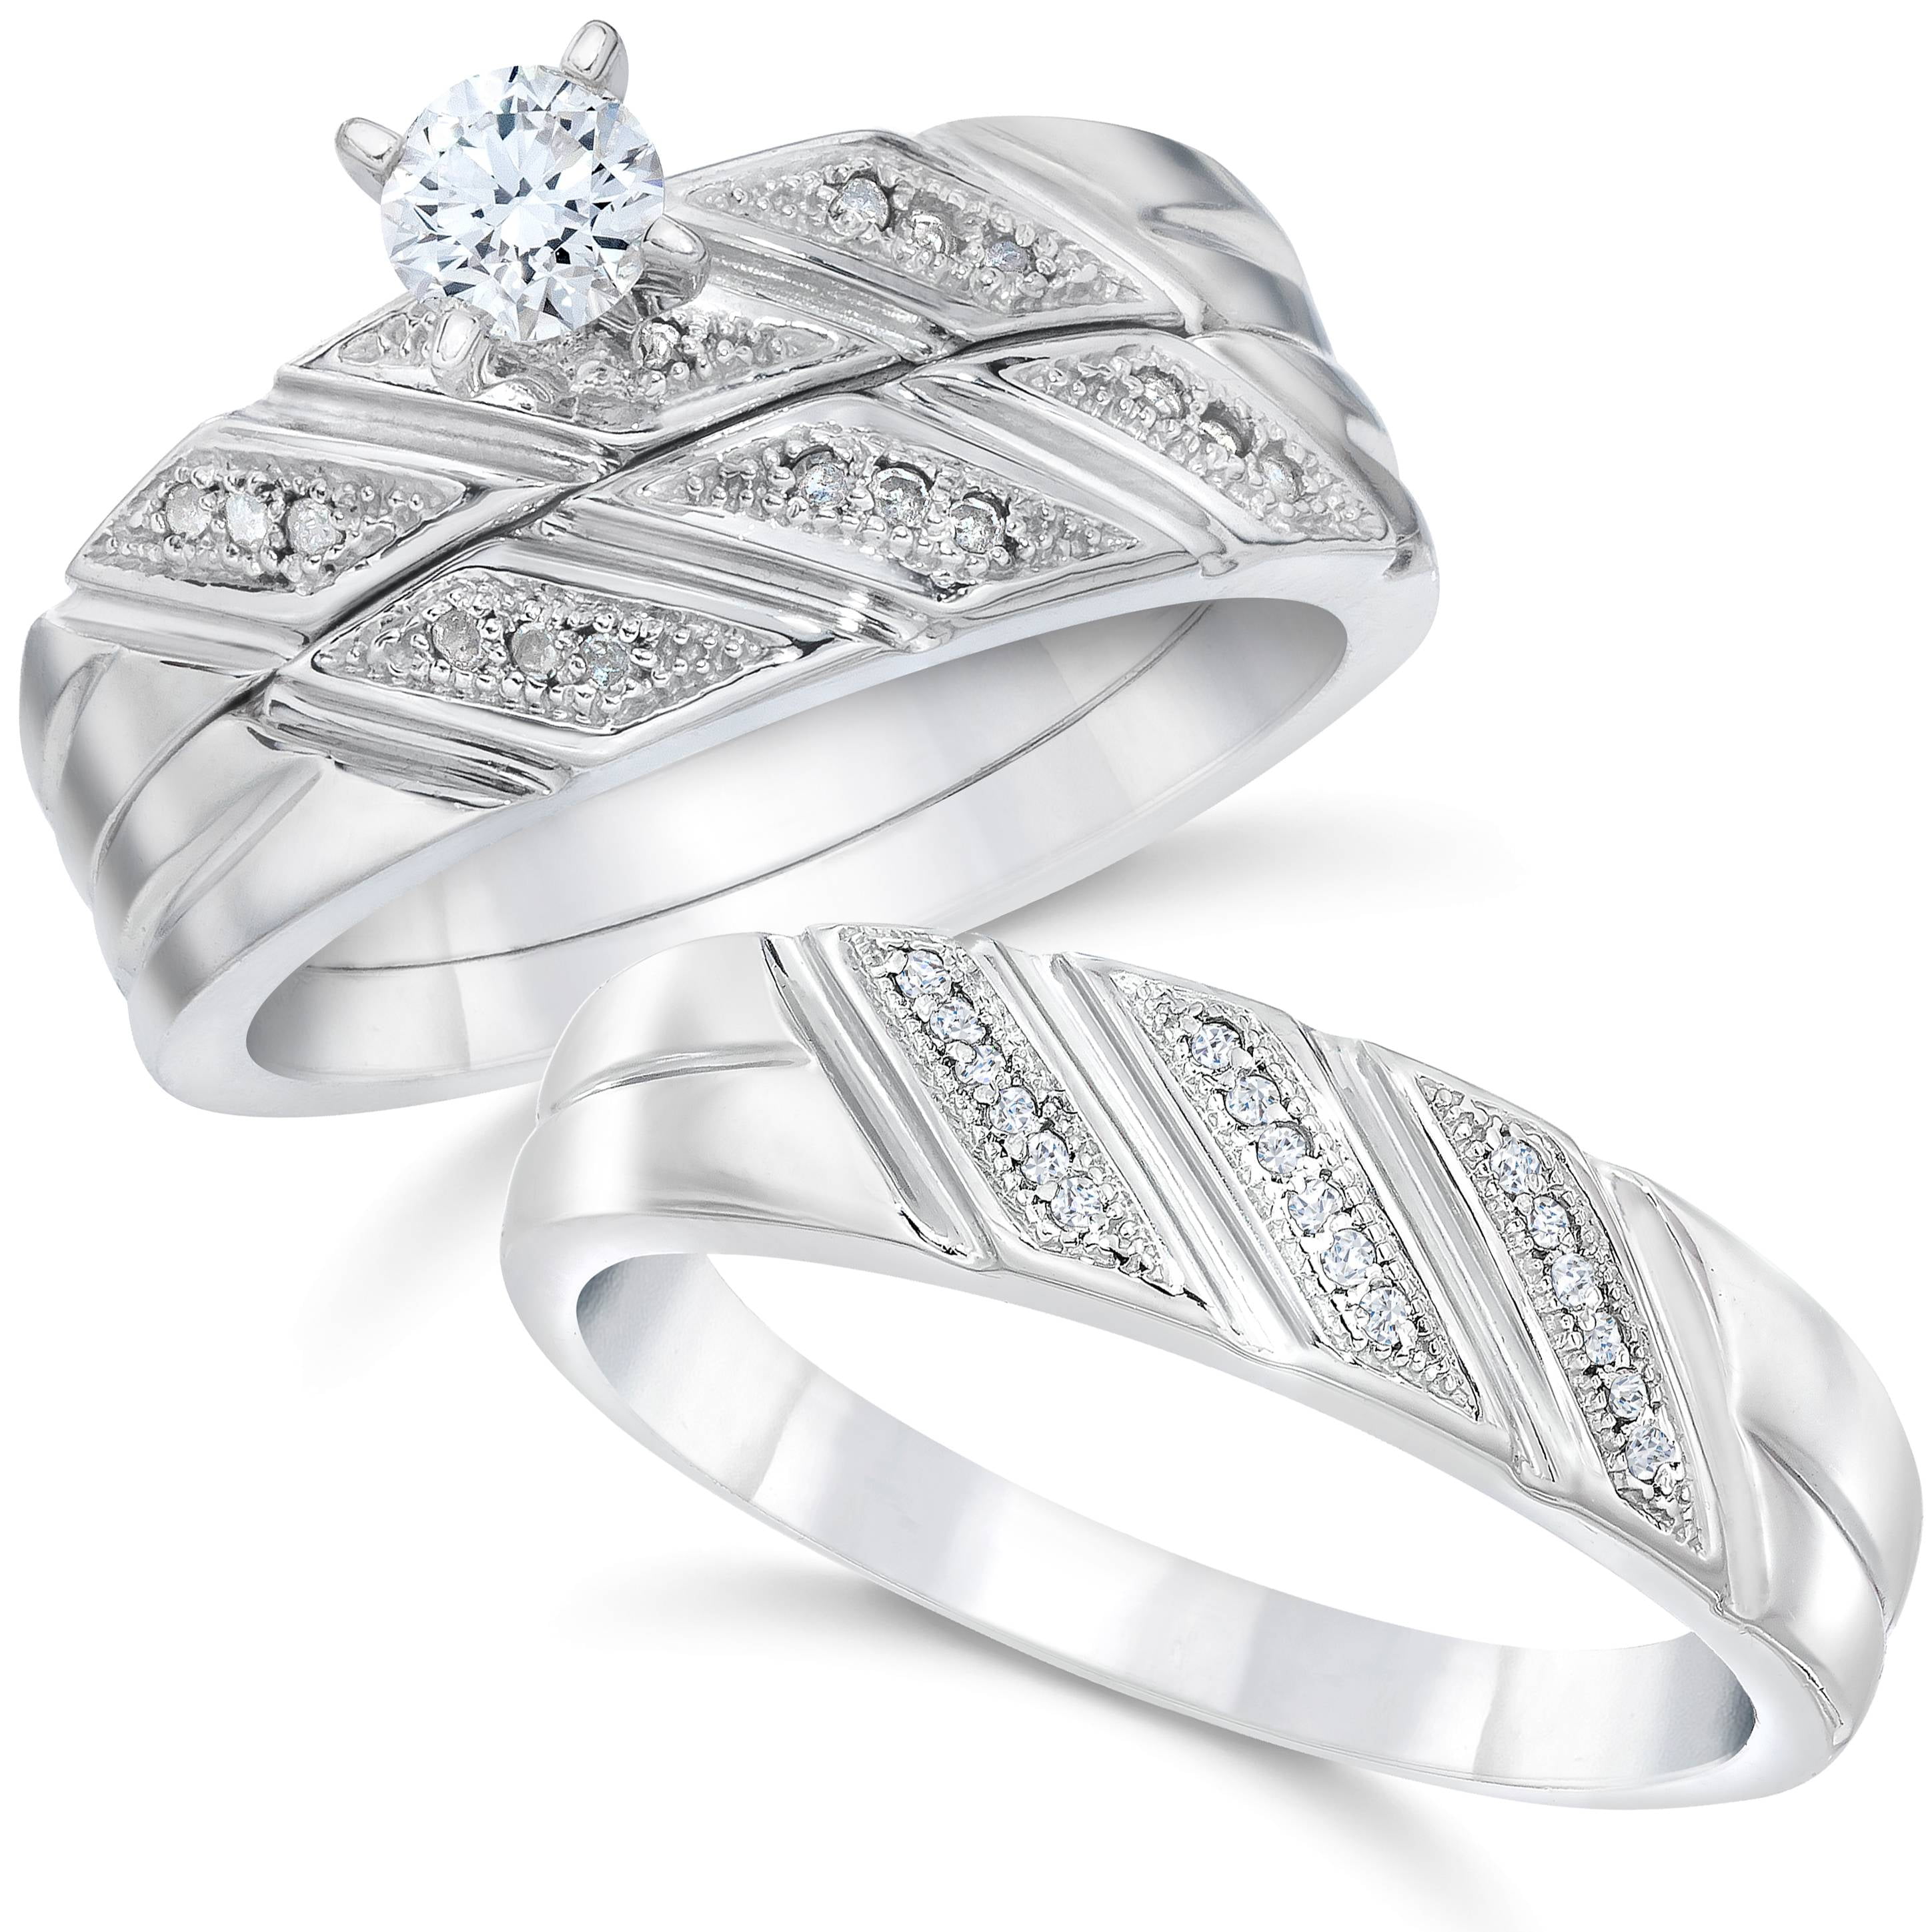 Pompeii3 1 3ct His Hers Diamond Trio Engagement Wedding Ring Set 10K White Gold 77a56dc5 e7bc 4ebe a2e7 93835228e93b 1.6fa9430488baf4d60faf819283b085b8